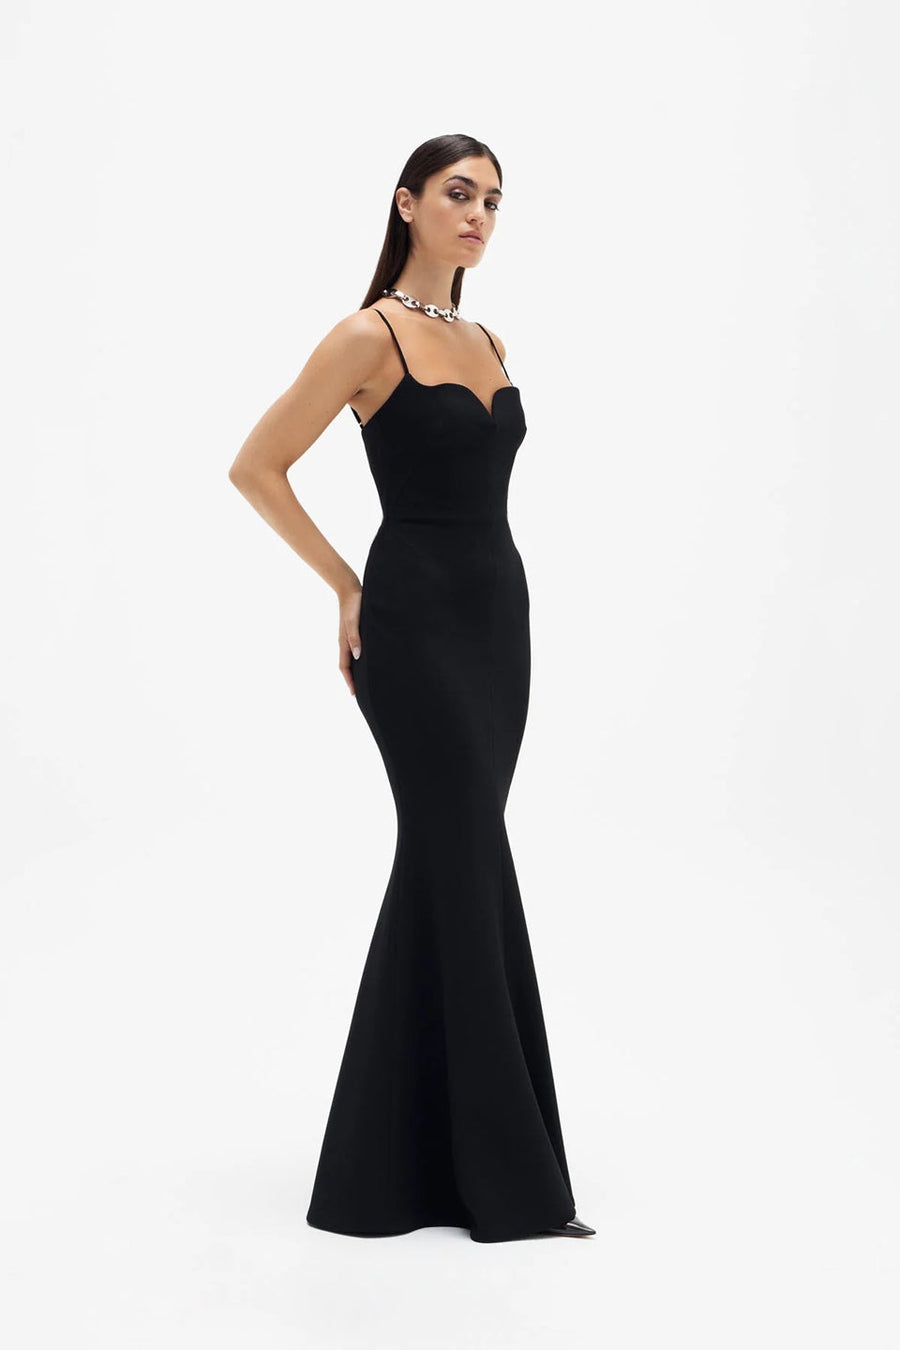 rachel gilbert loren gown black figure side